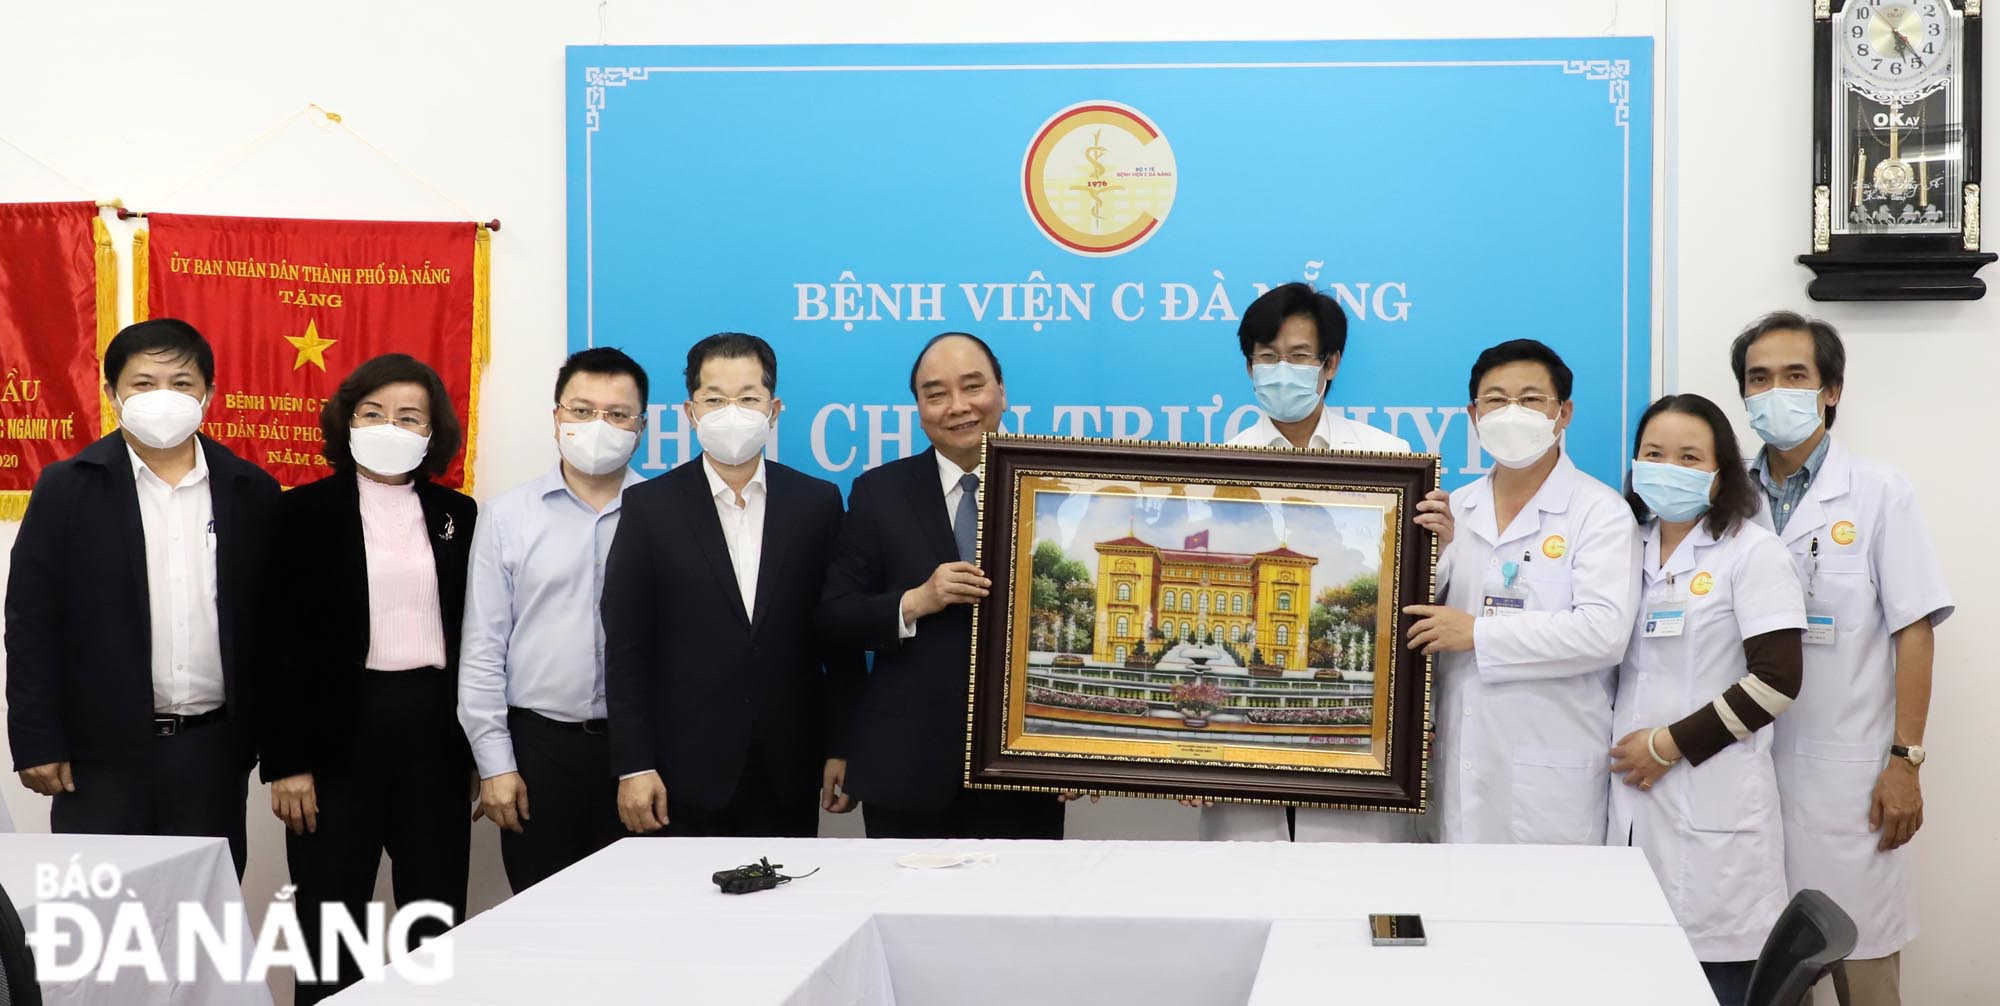 President Nguyen Xuan Phuc presenting a souvenir gift to the Da Nang-based Hospital C. Photo: NGOC PHU